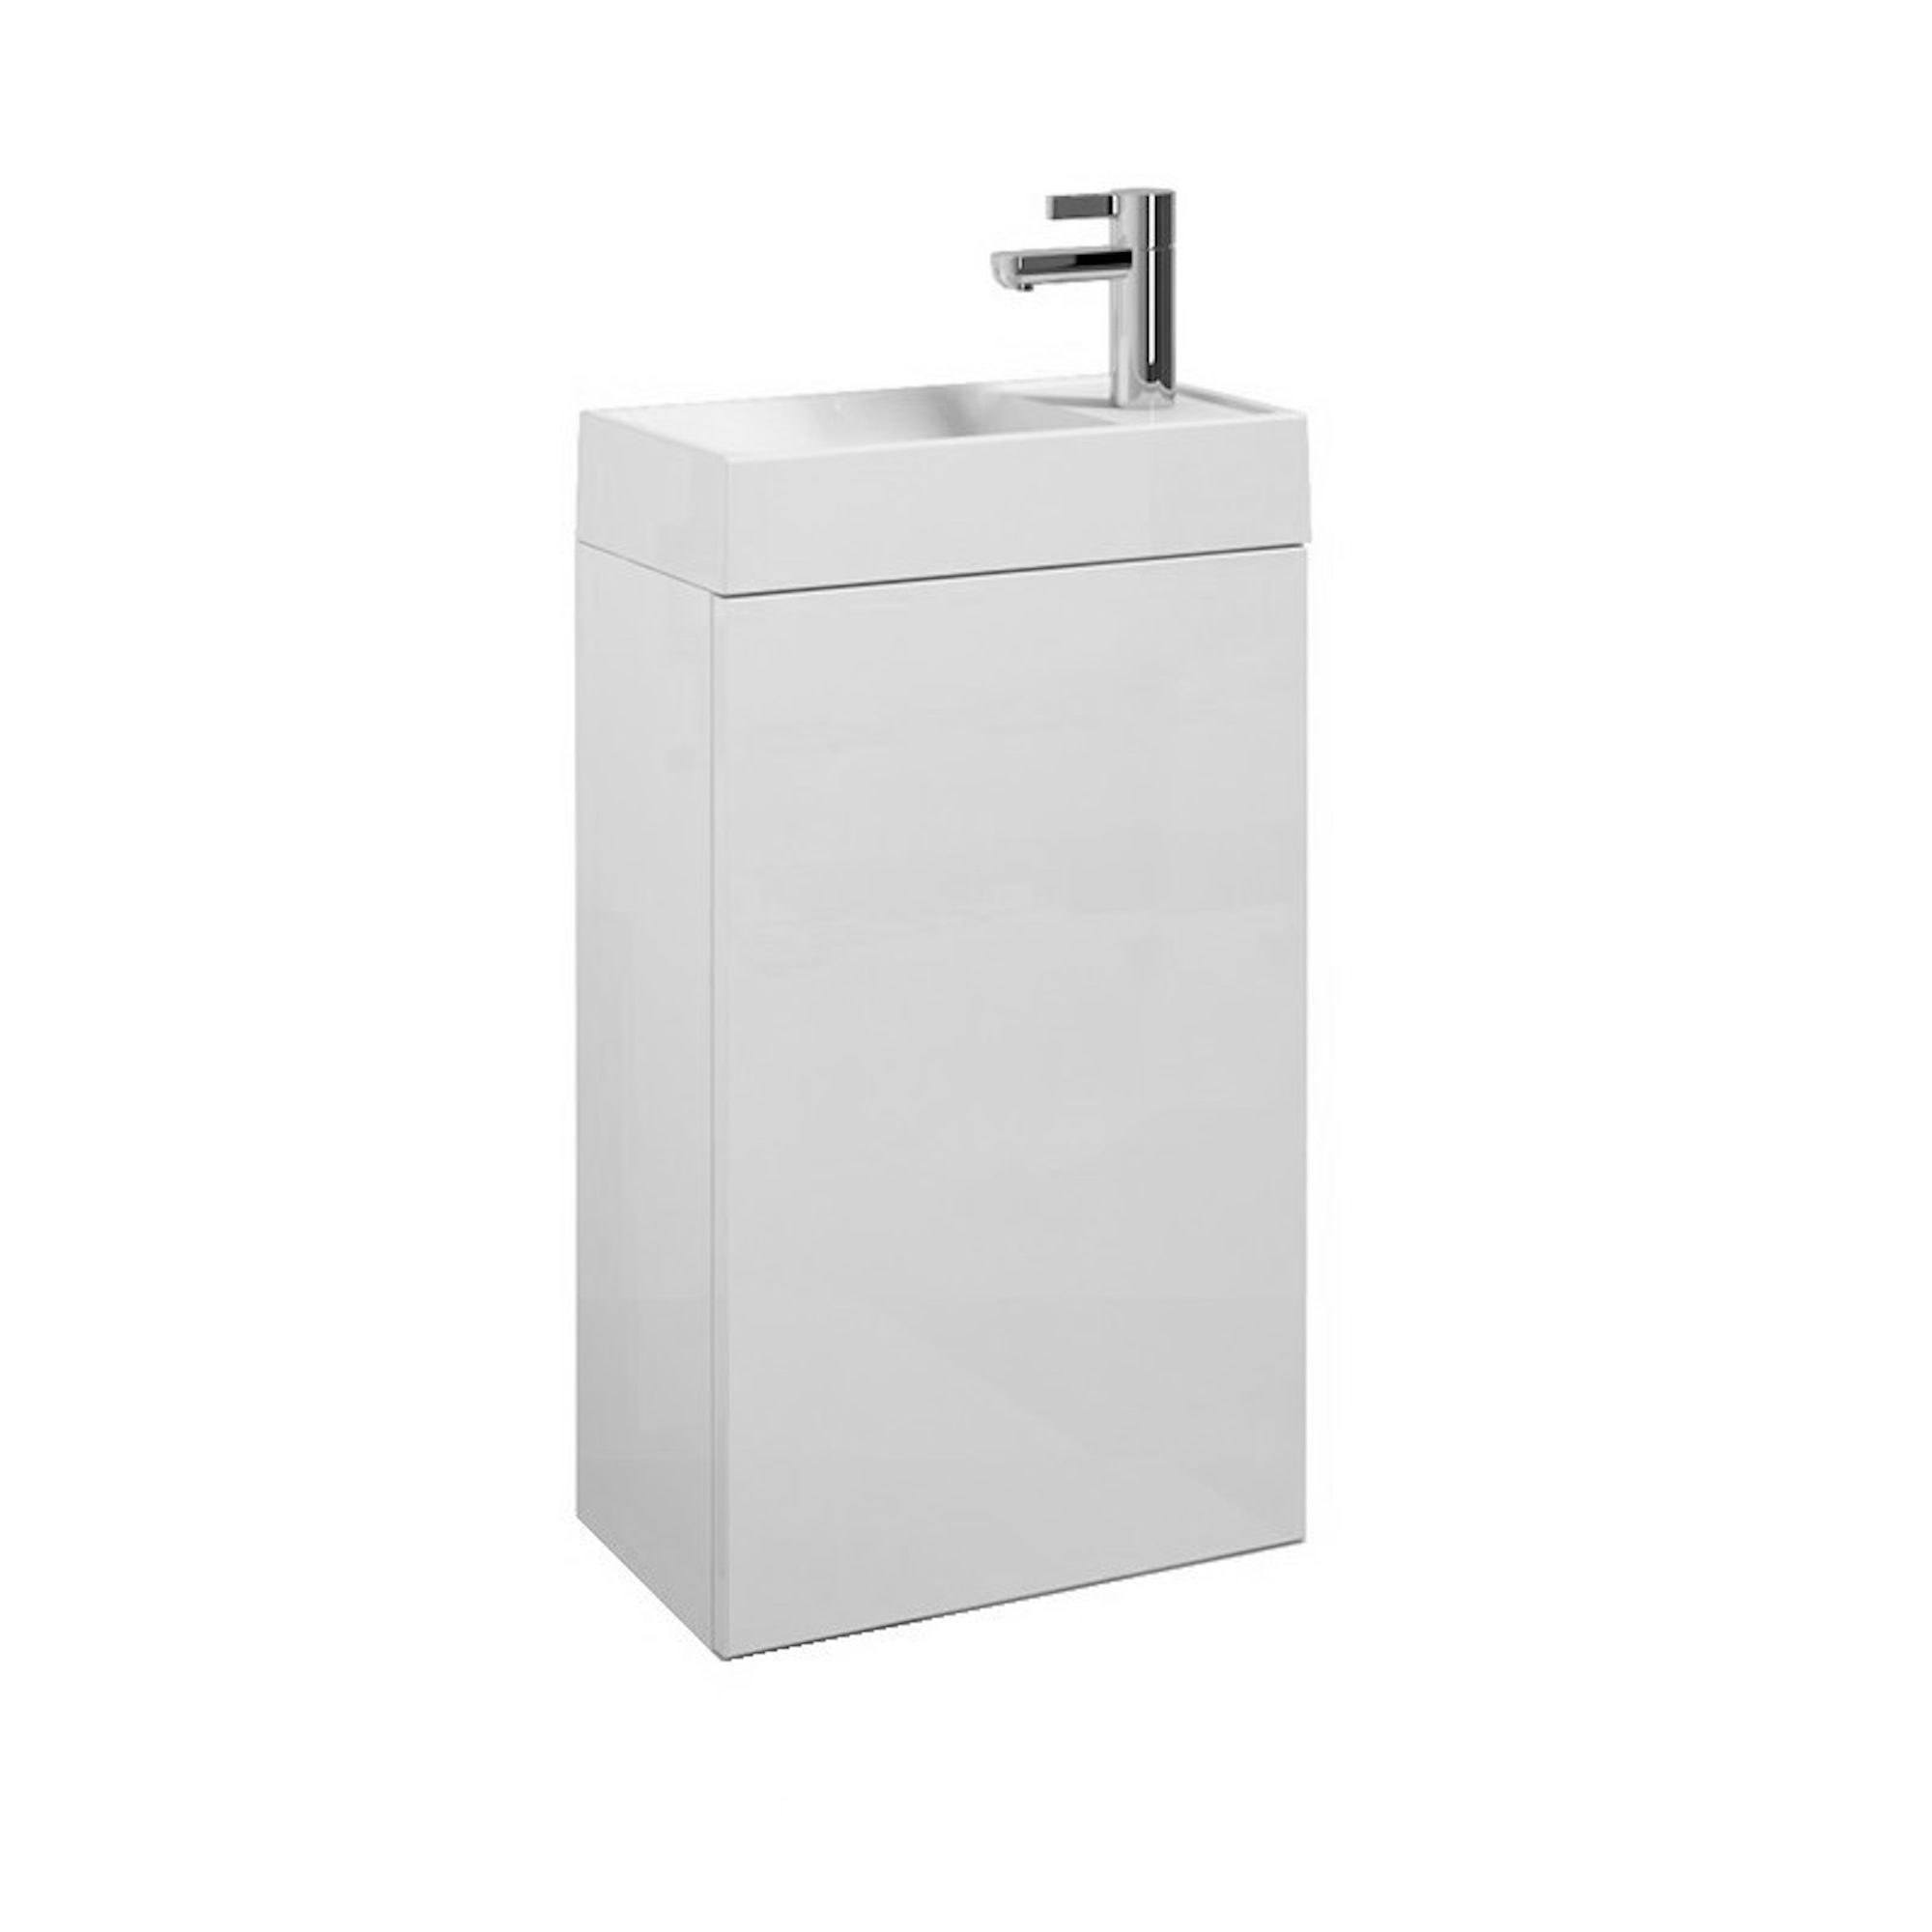 QUADRO 40x22cm washbasin 1TH & 1 door wall mounted unit - Gloss White